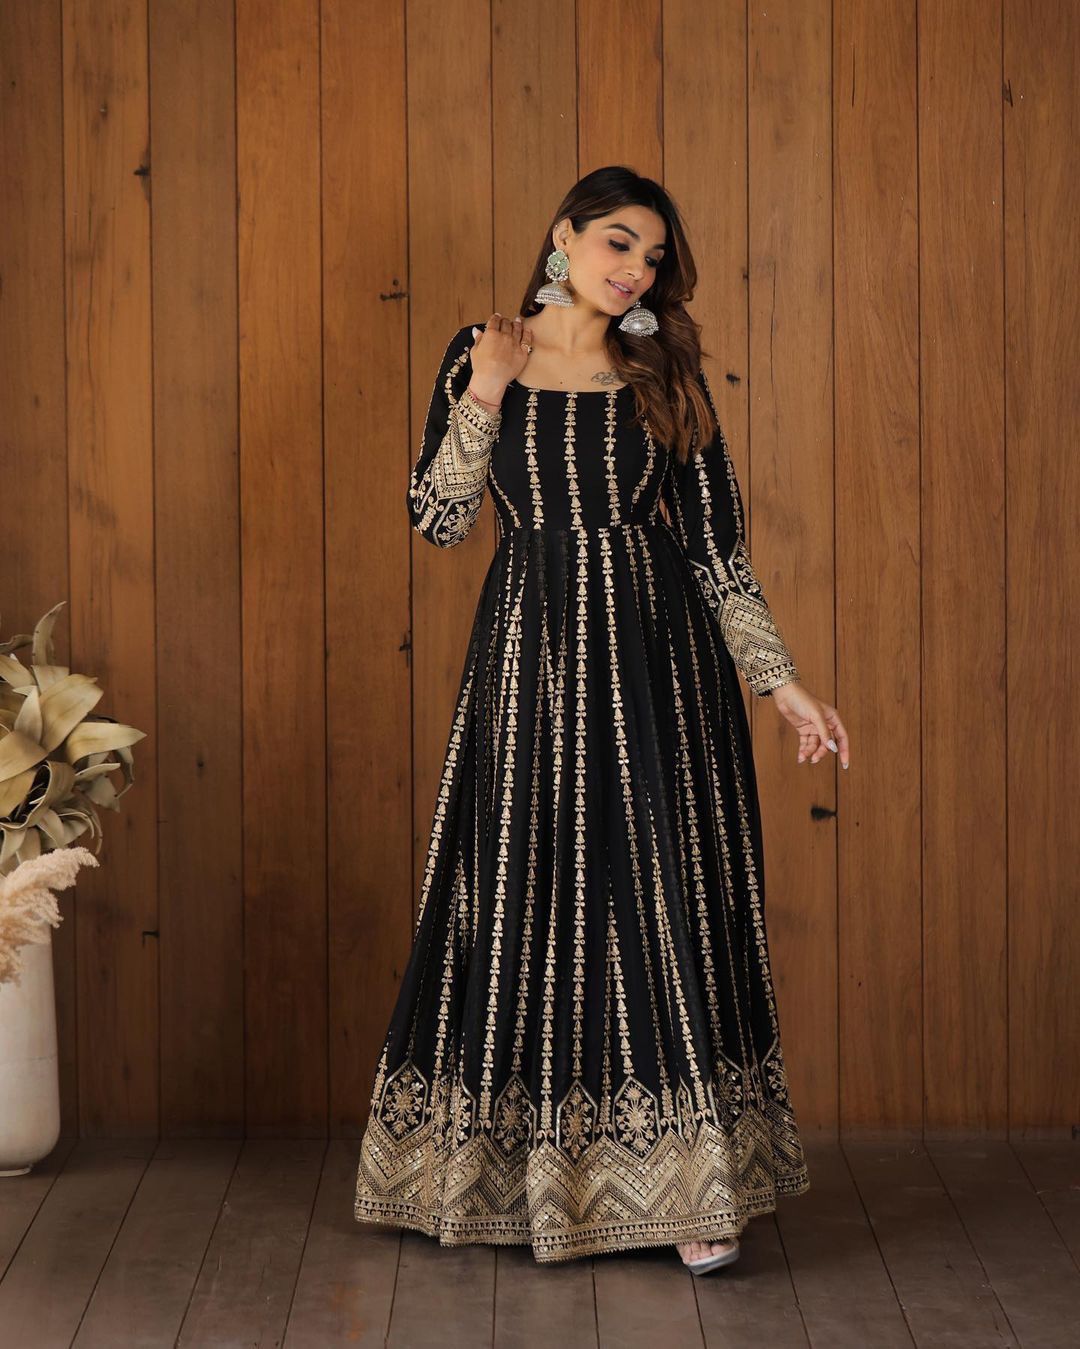 Sehar Khan looks ravishing in beautiful black dress ❤️❤️❤️ . . .  #CityMagazine #Pakistan #CityMagazinePakistan #PakistaniCelebrities #Celebs  | Instagram